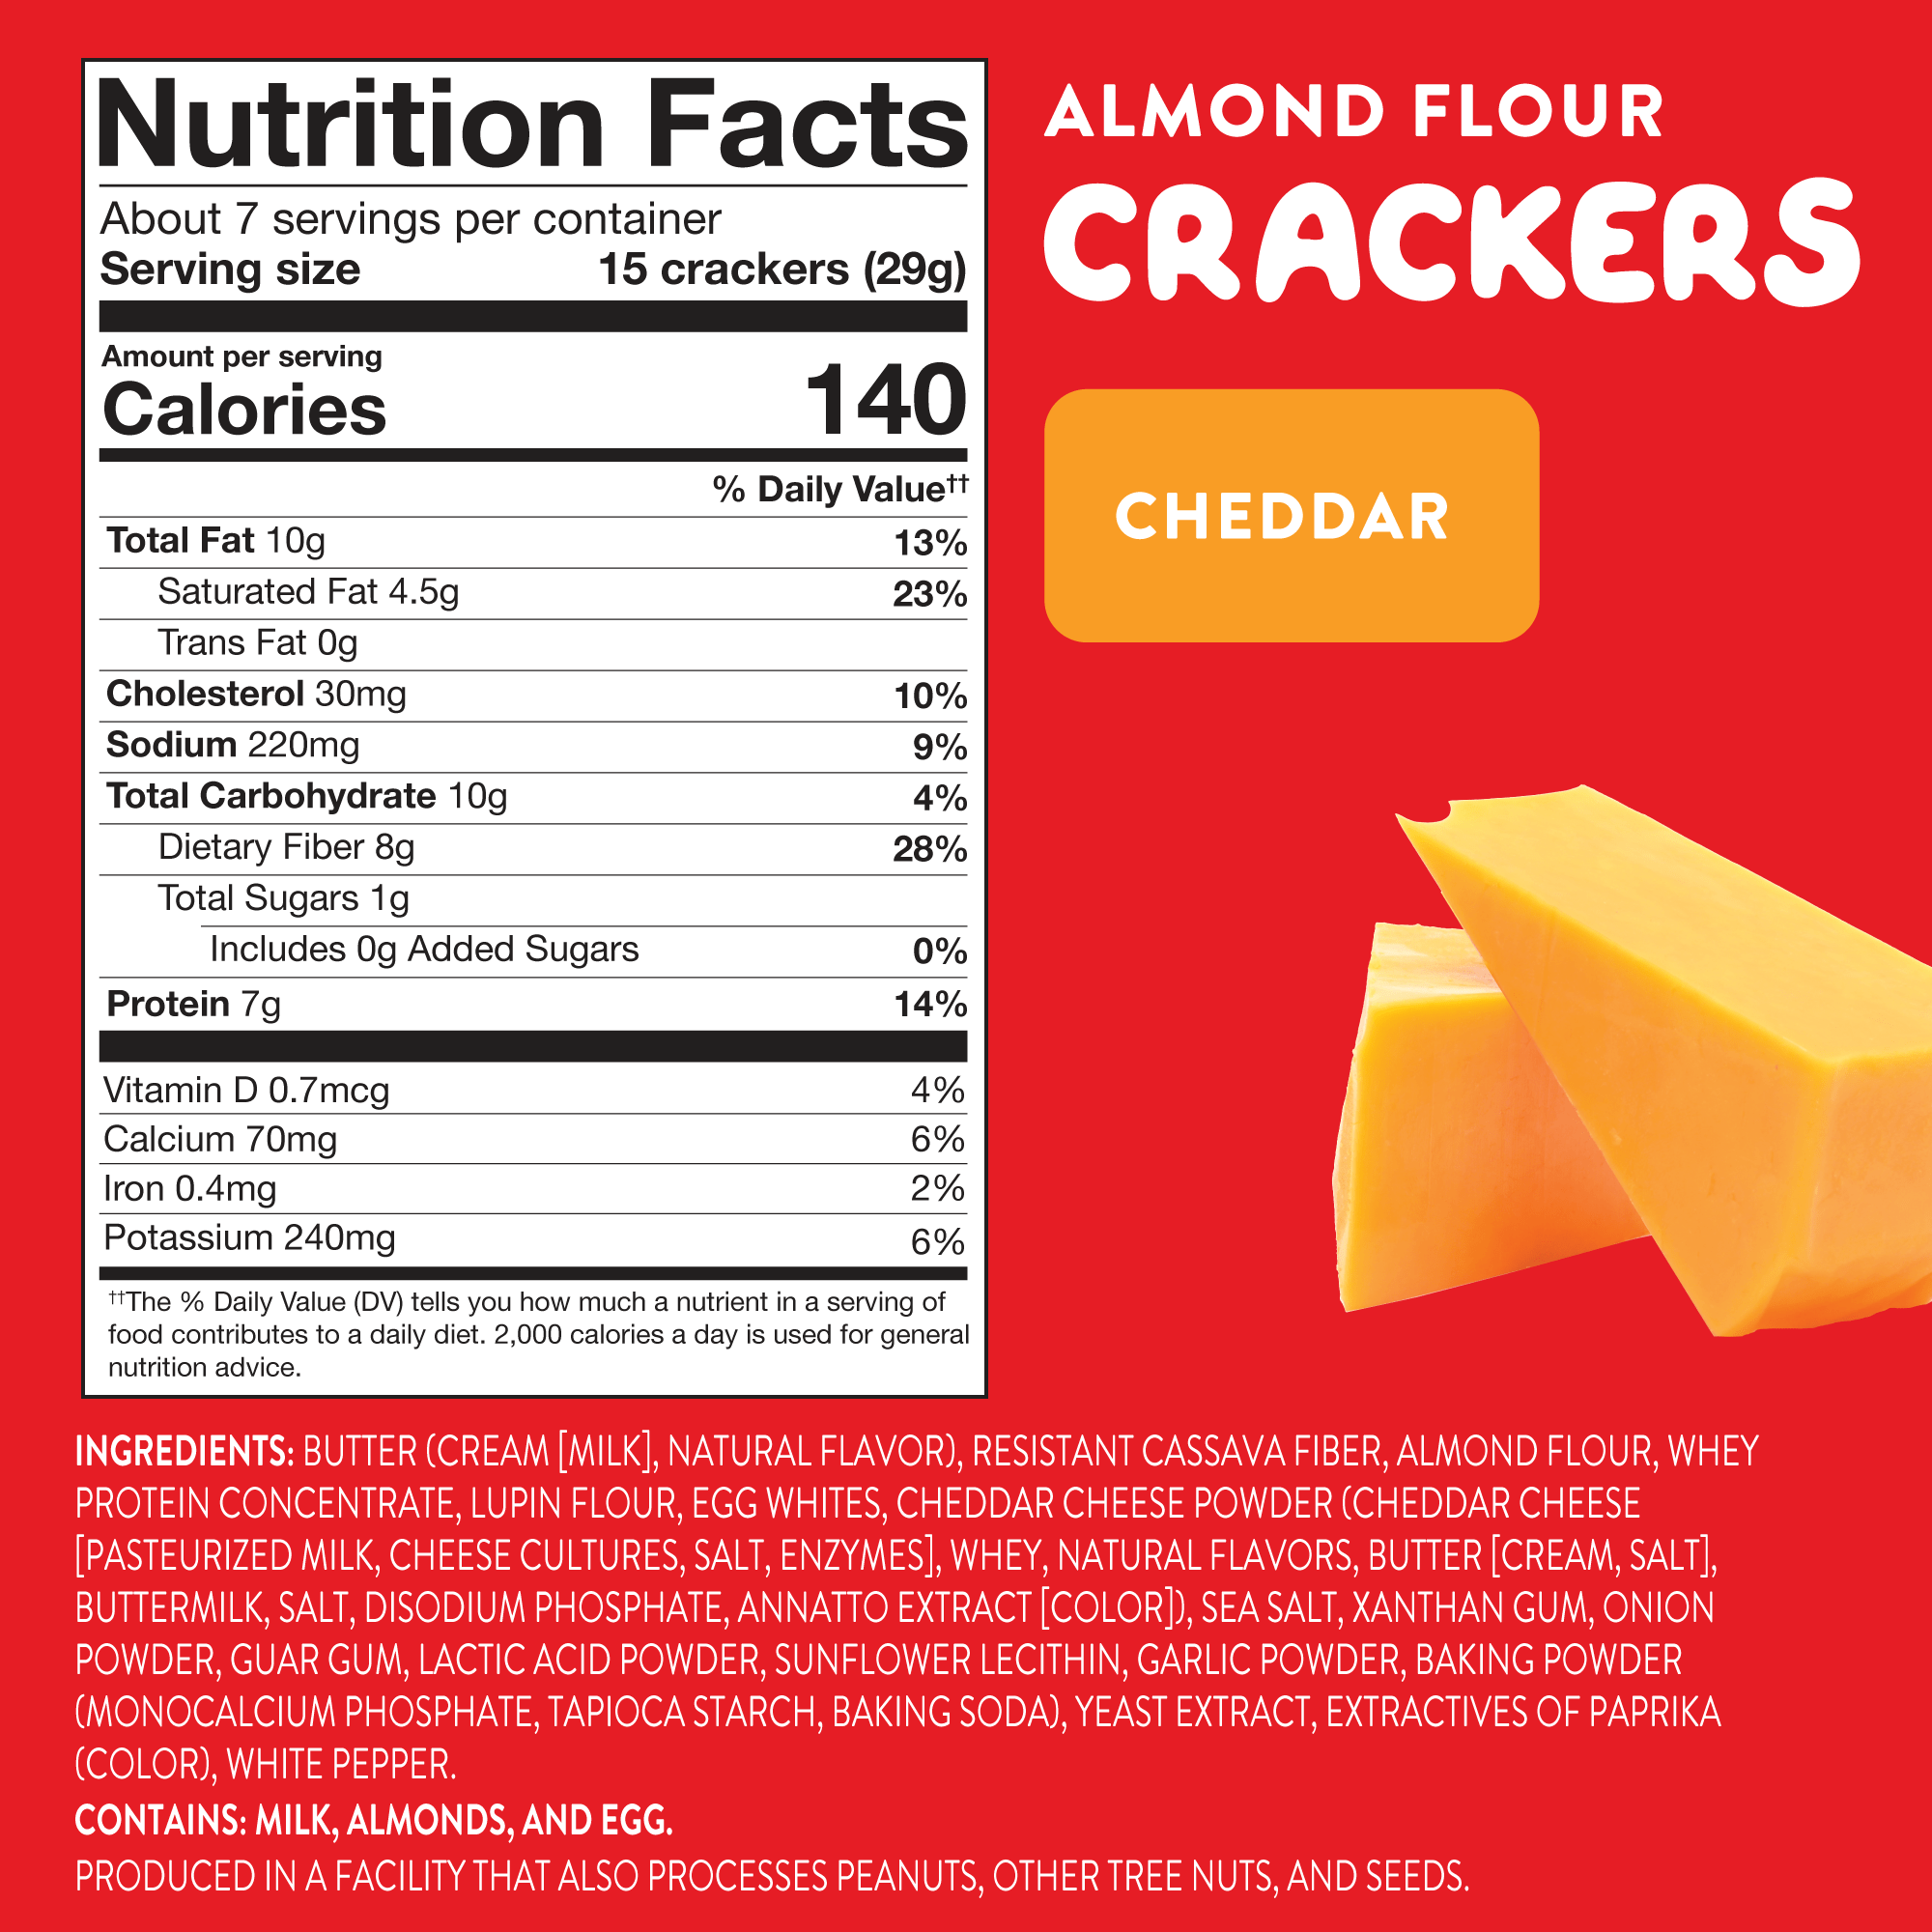 Almond Flour Crackers: Cheddar